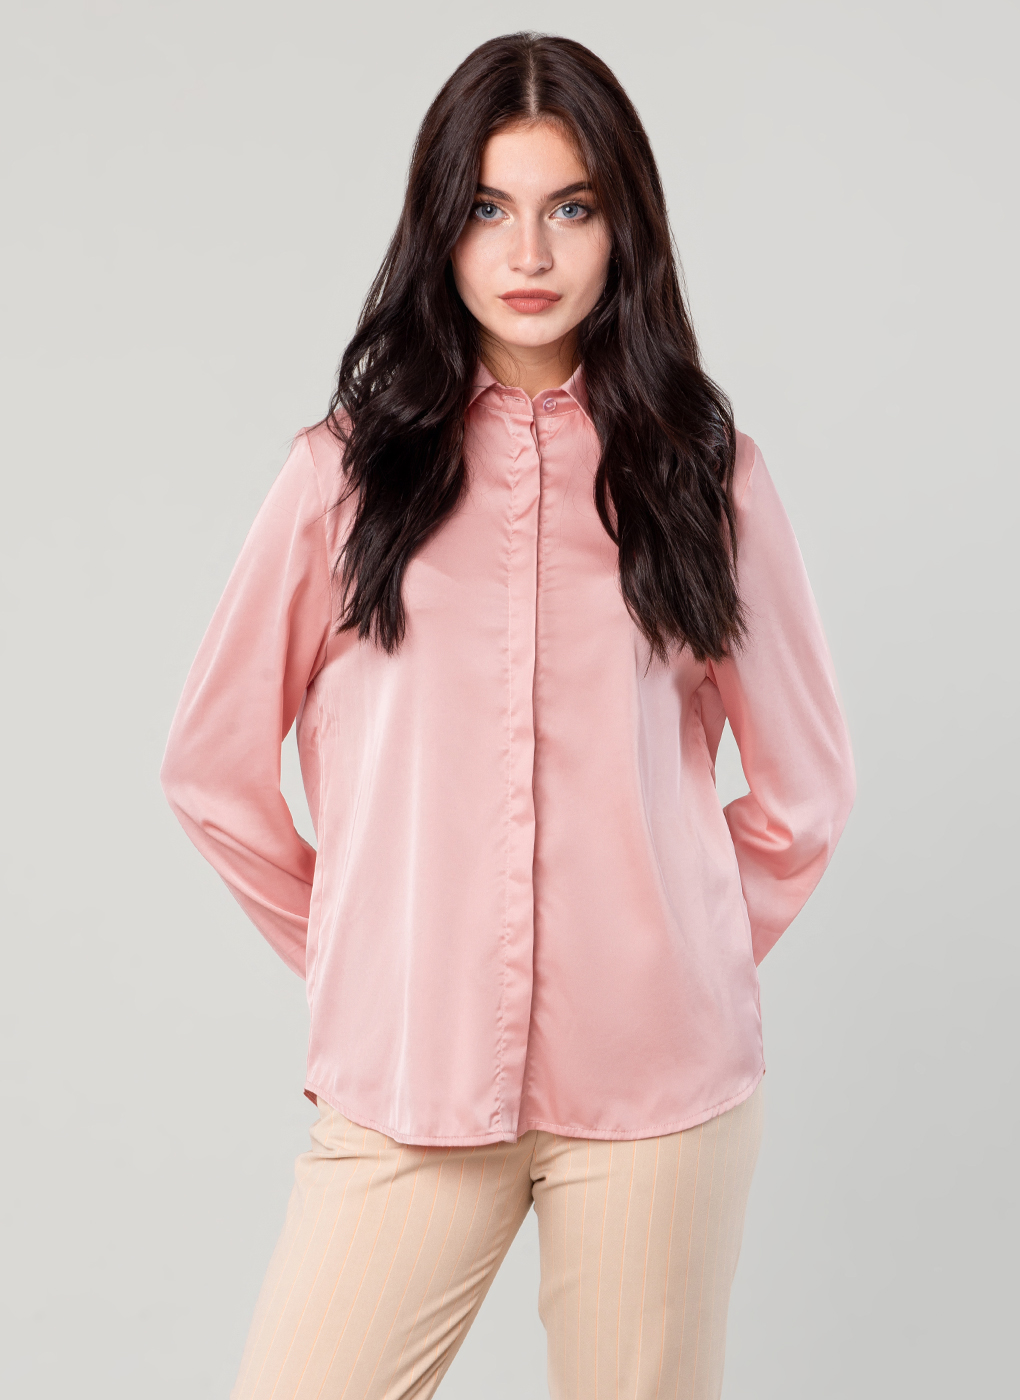 Блуза женская SCANDZA 61656 розовая 54 RU